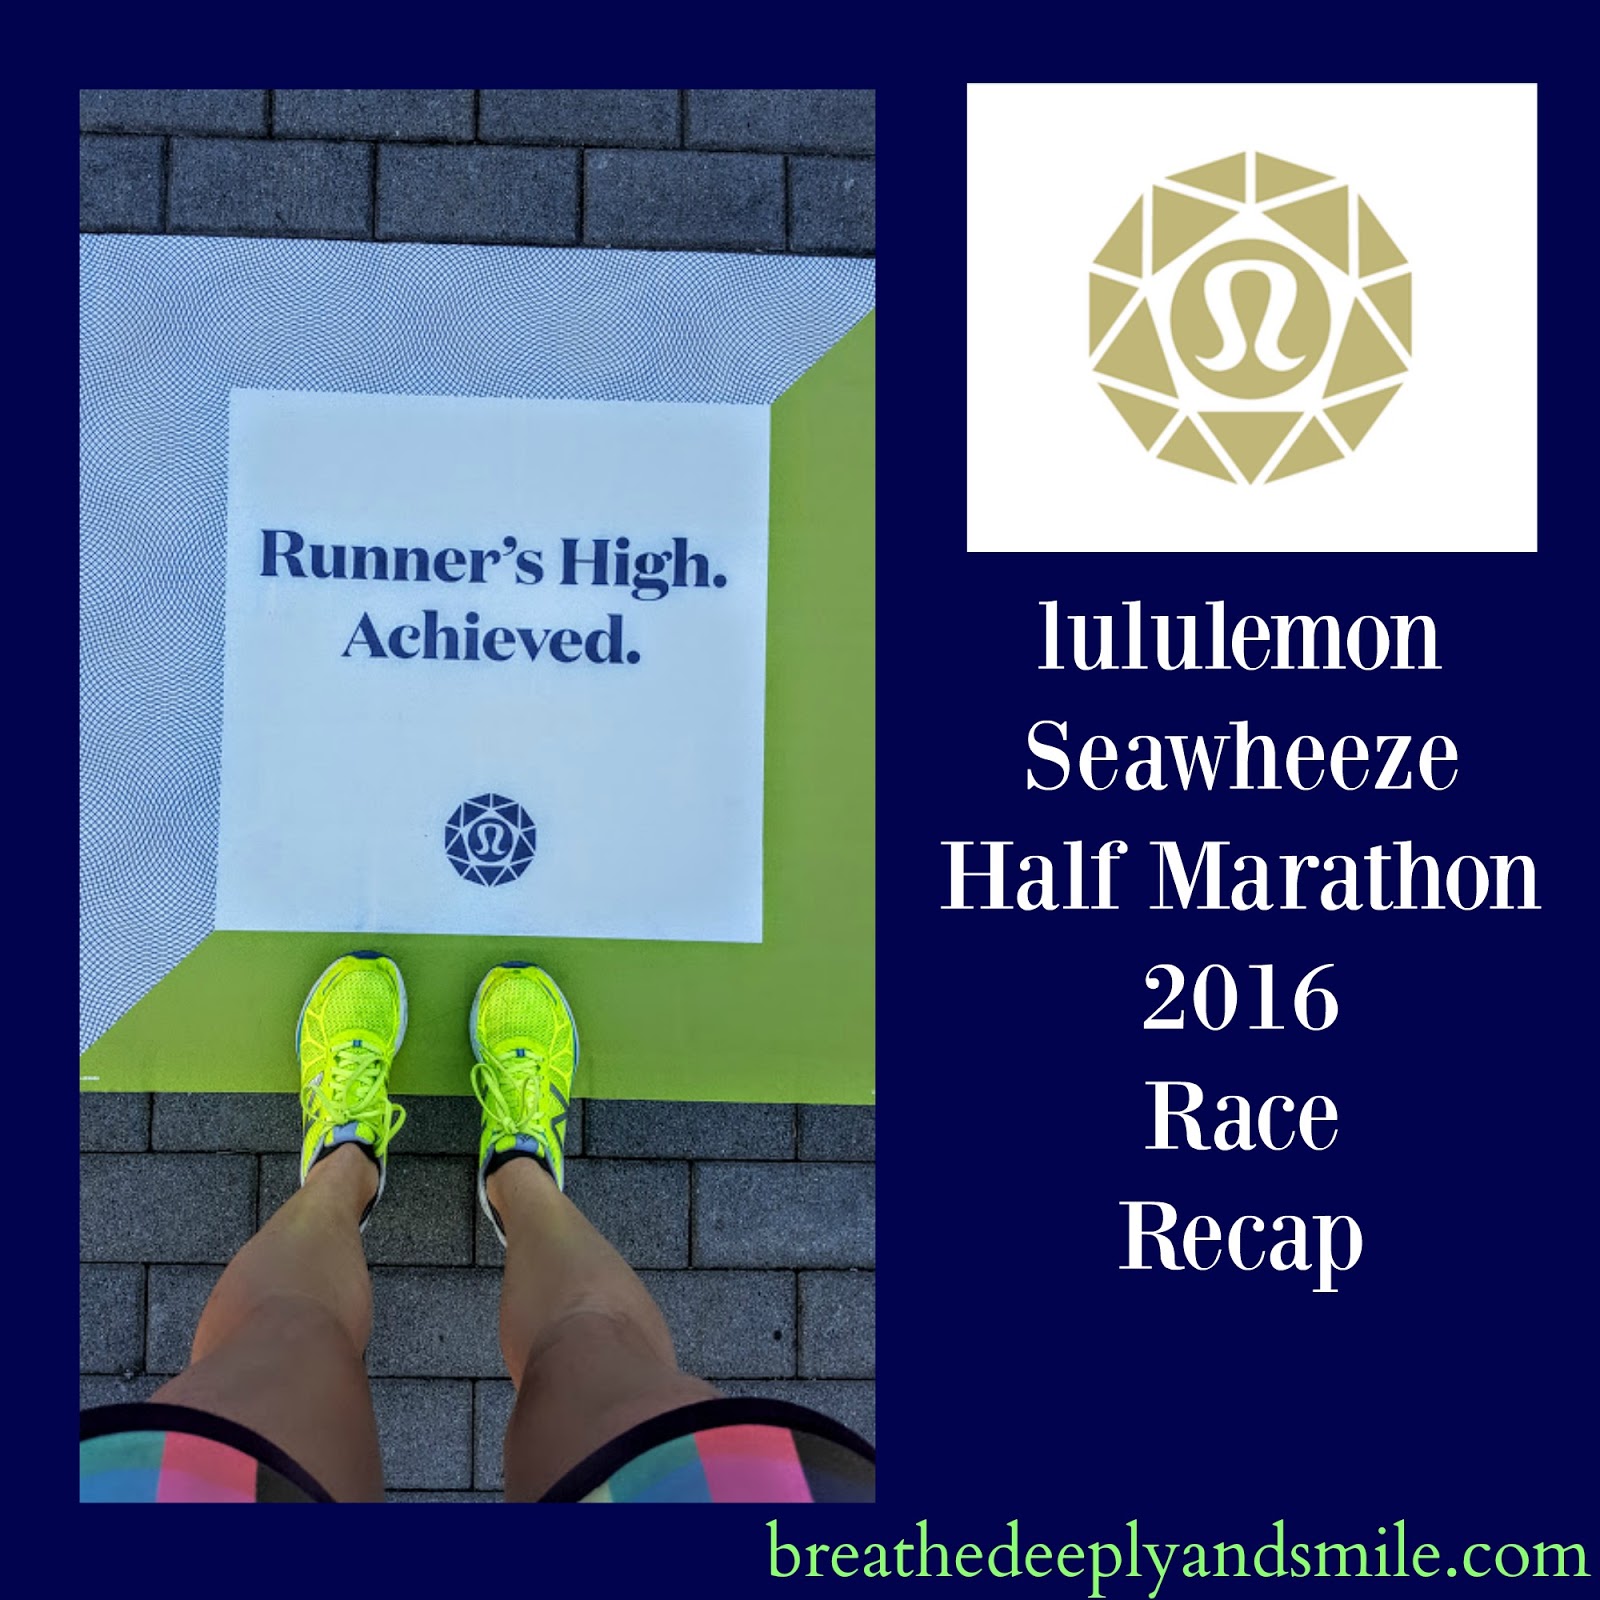 Breathe Deeply and Smile: lululemon Seawheeze Half Marathon 2016